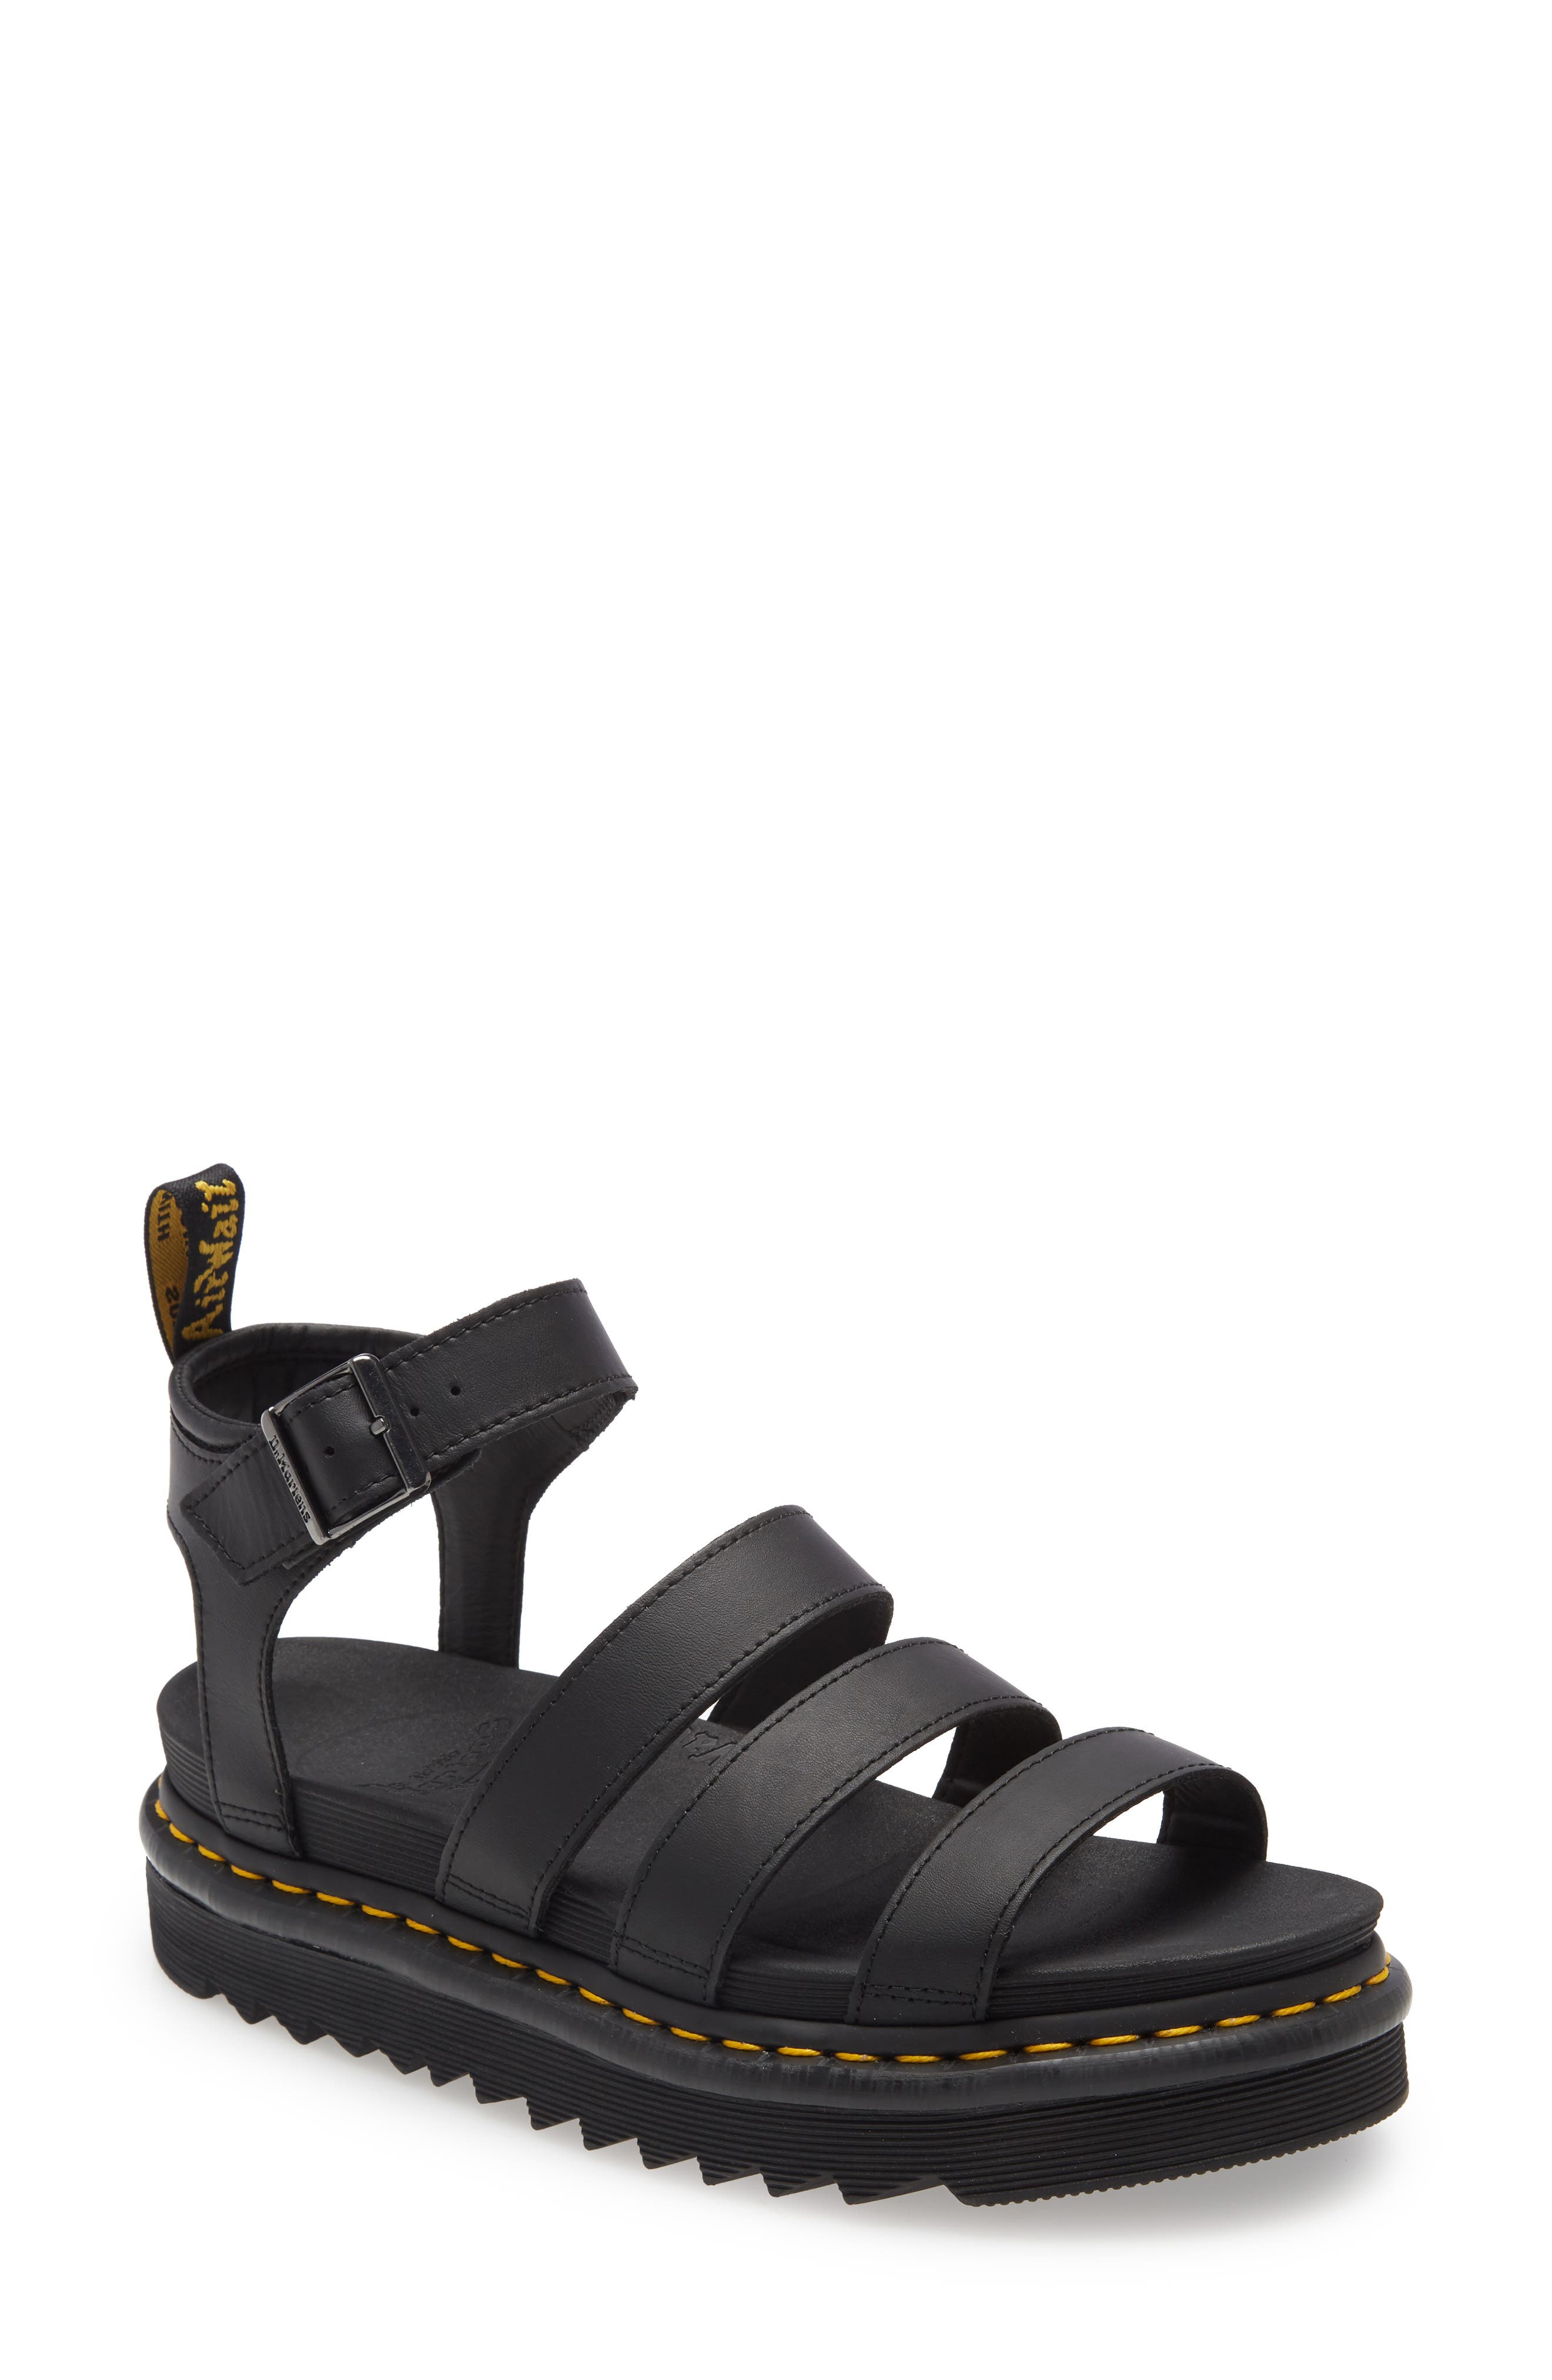 Blaire Doc Marten Sandals Flash Sales, UP TO 61% OFF | www.loop-cn.com